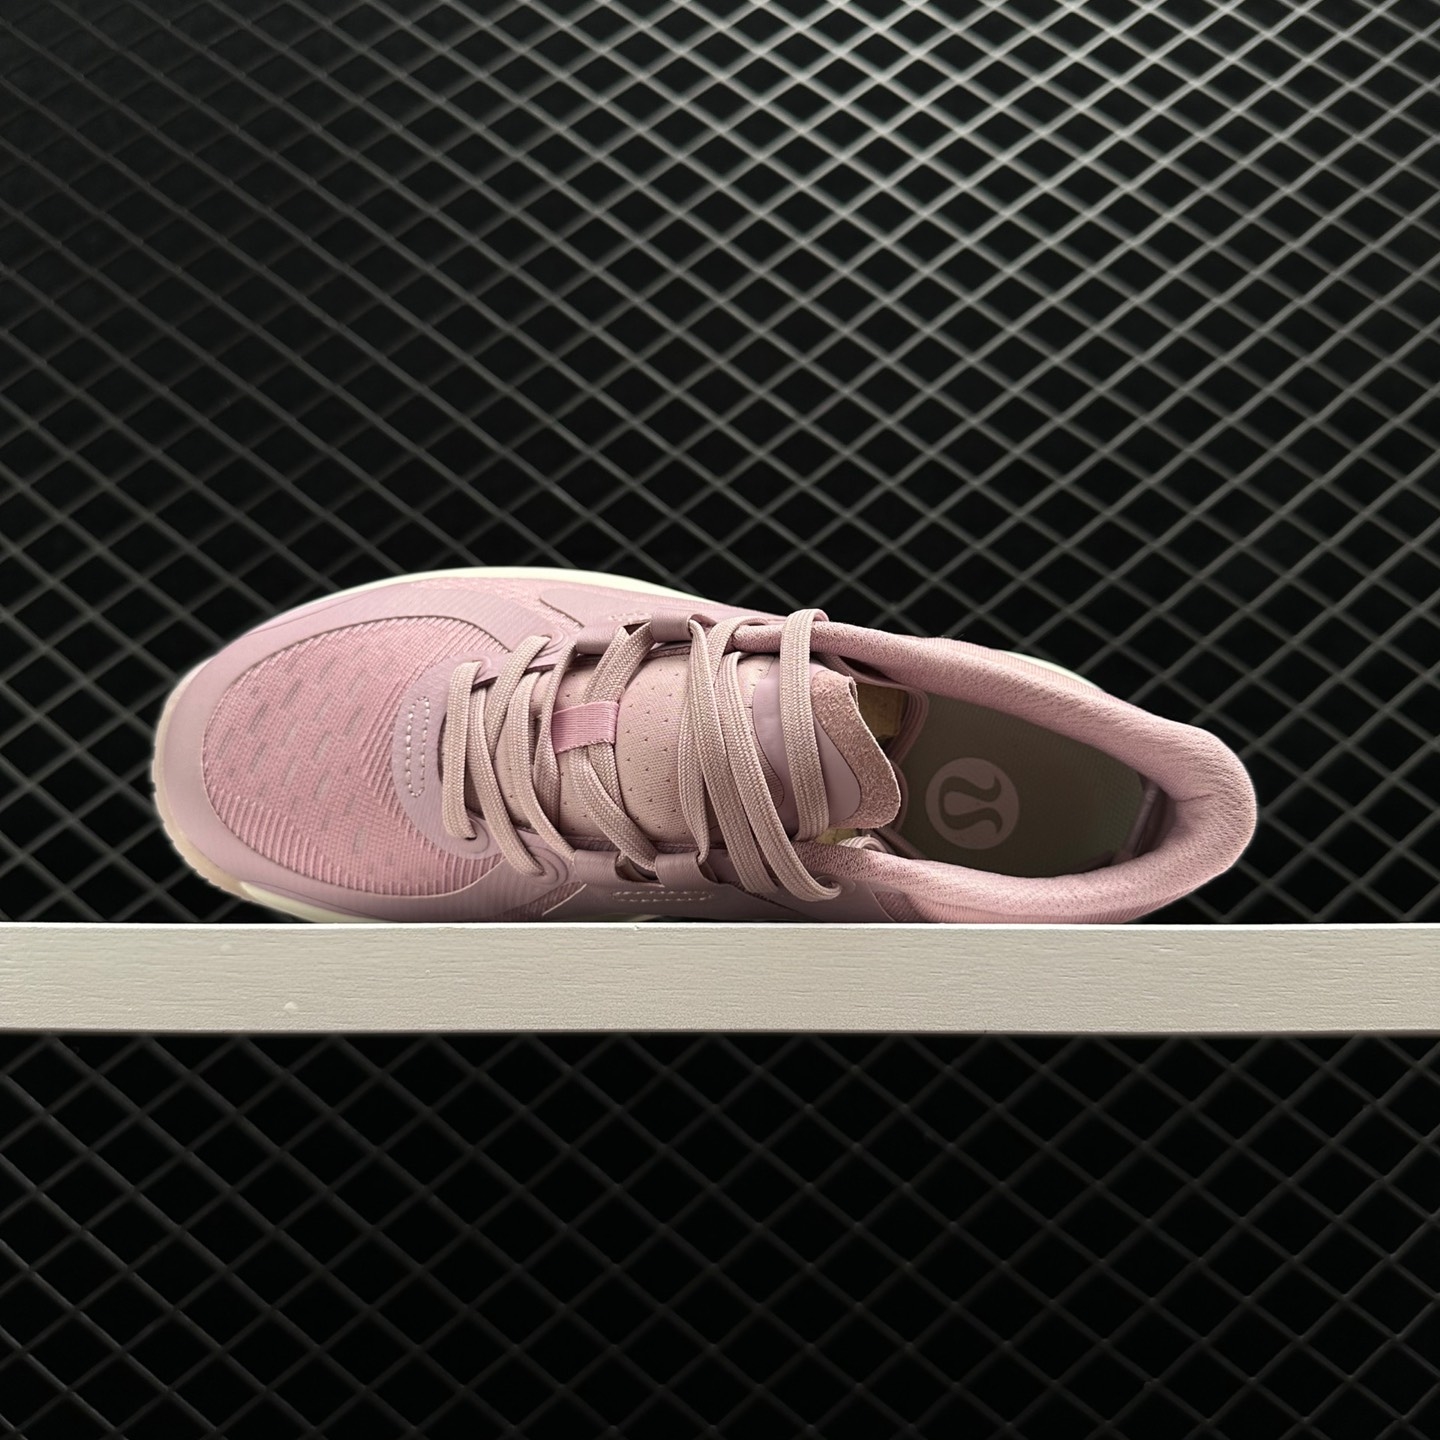 Lululemon Strongfeel Training Shoes in Misty Pink/White/Sunset